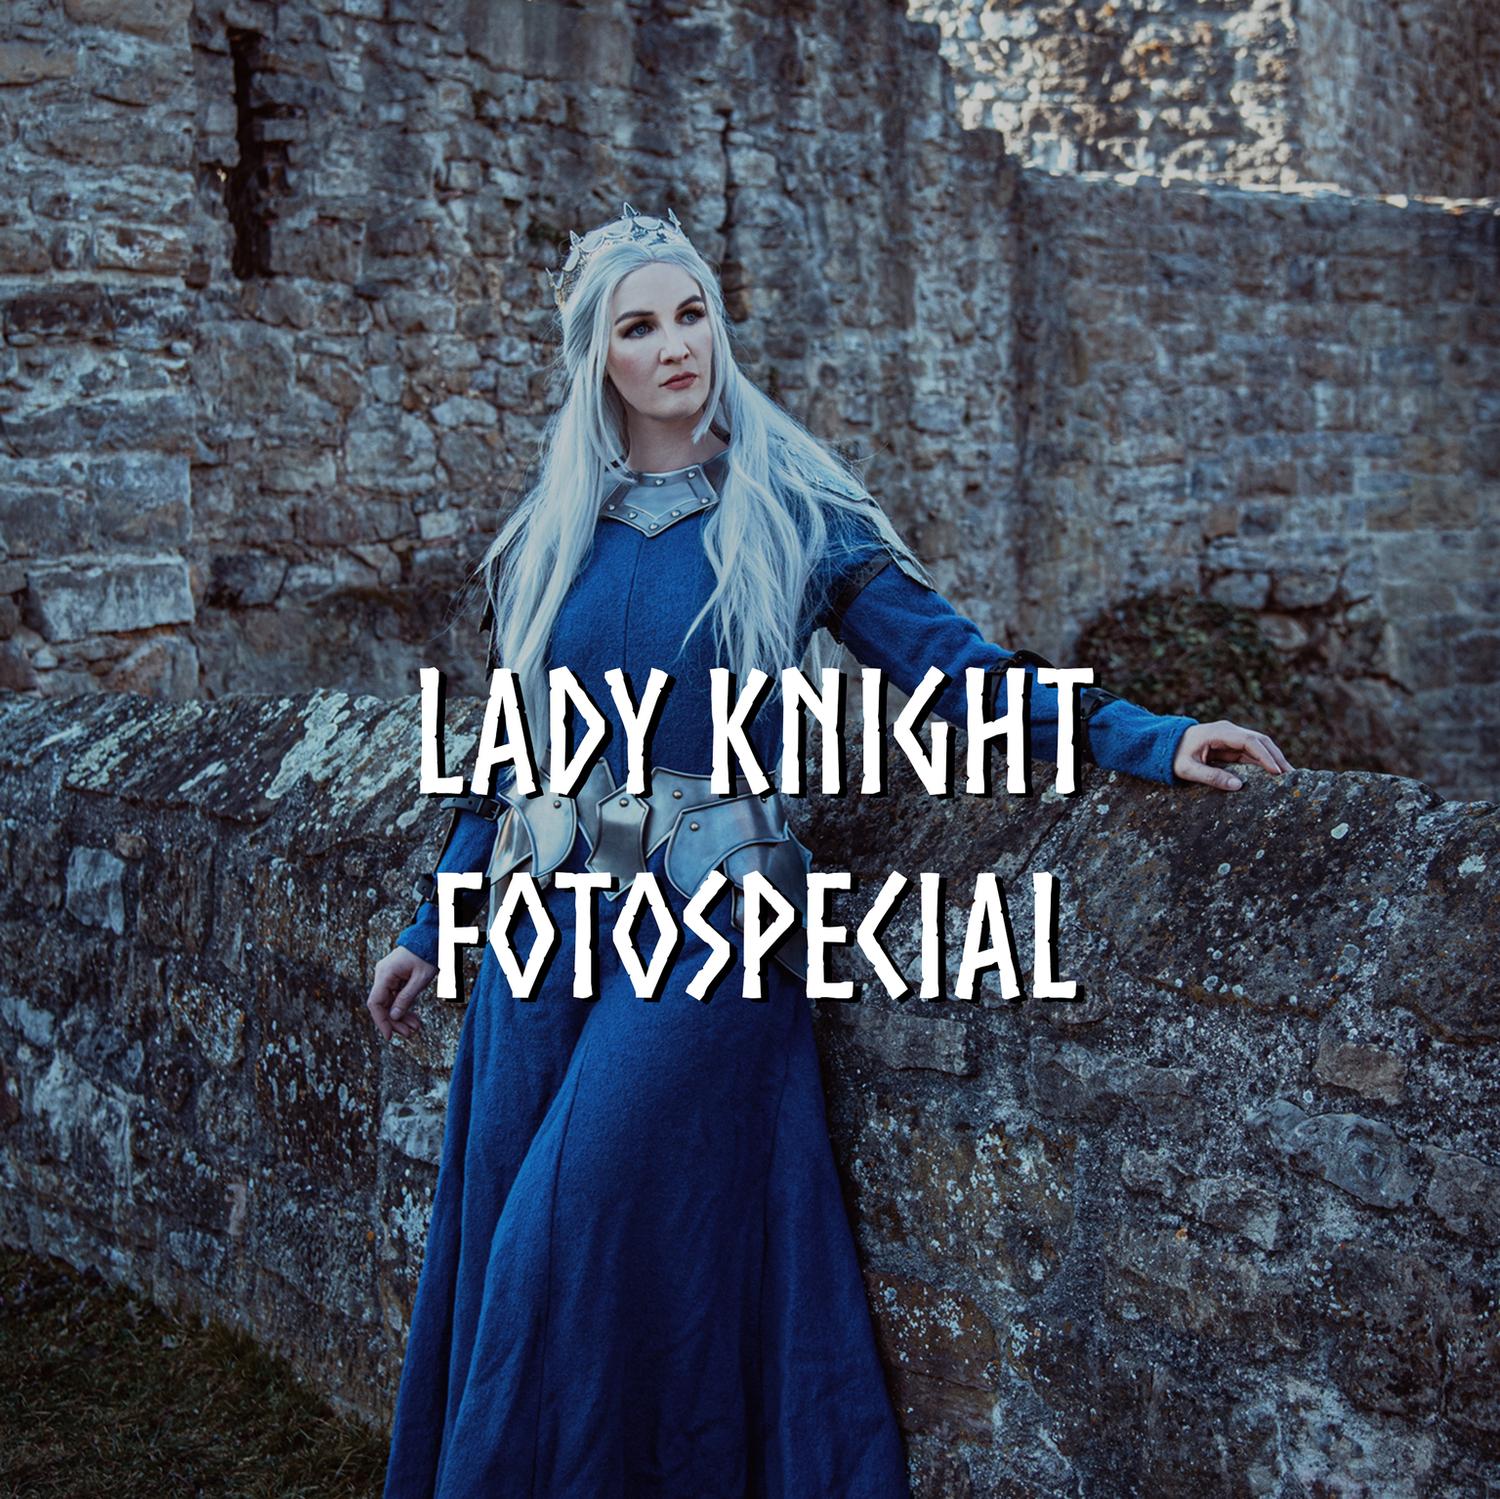 Lady Knight Fotospecial